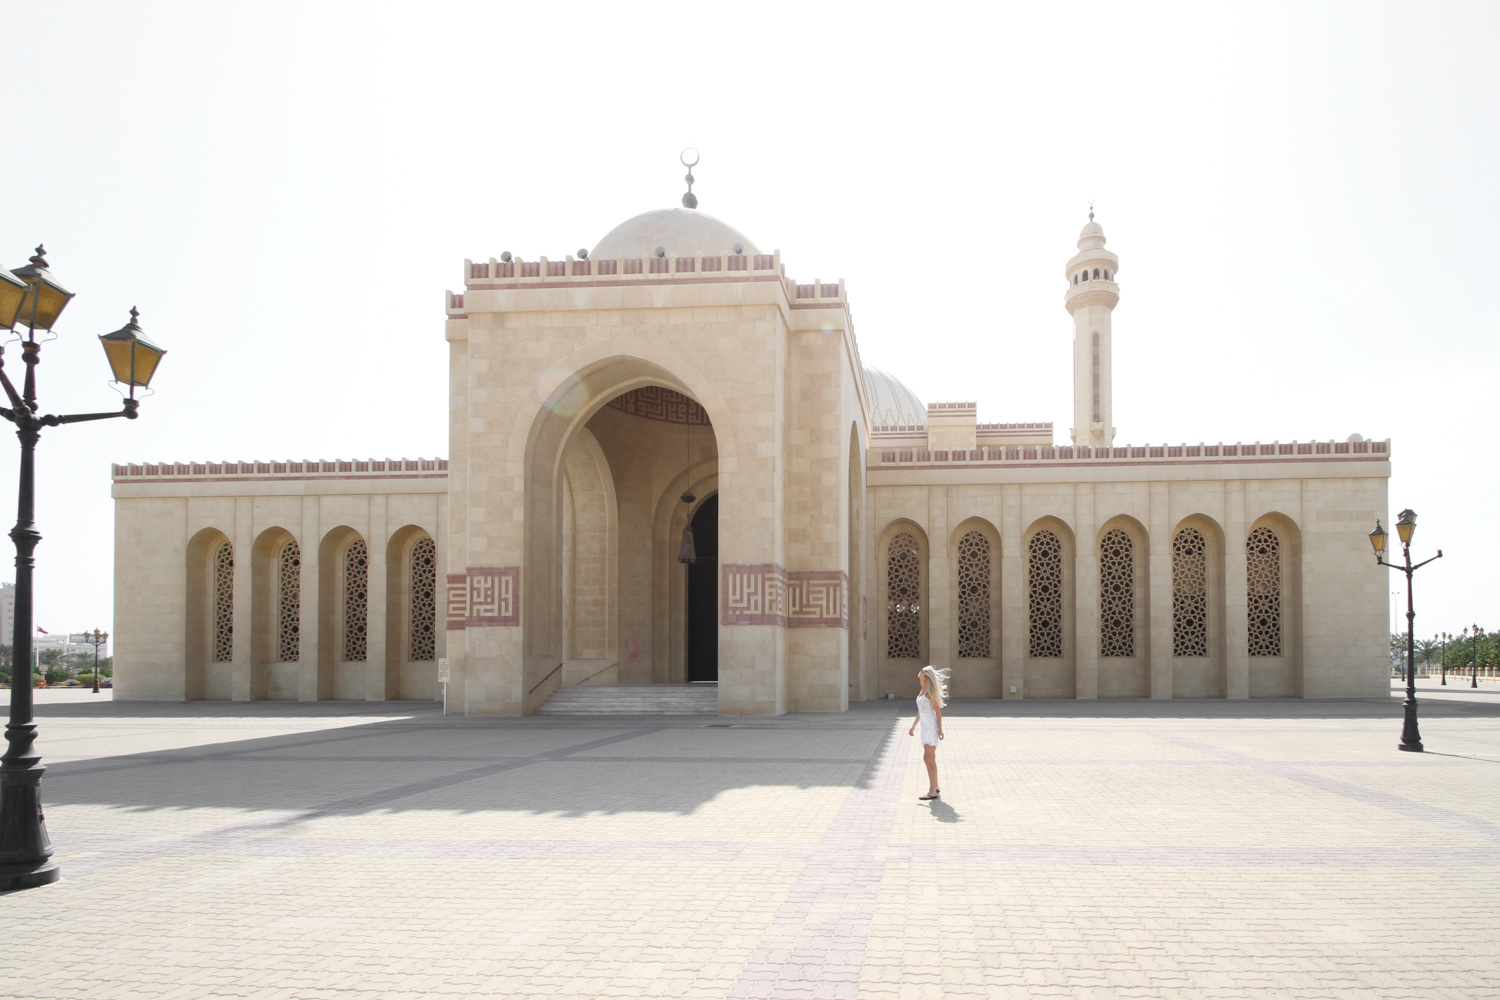 Christian-Schaffer-Bahrain-Grand-Mosque-Manama-002.jpg